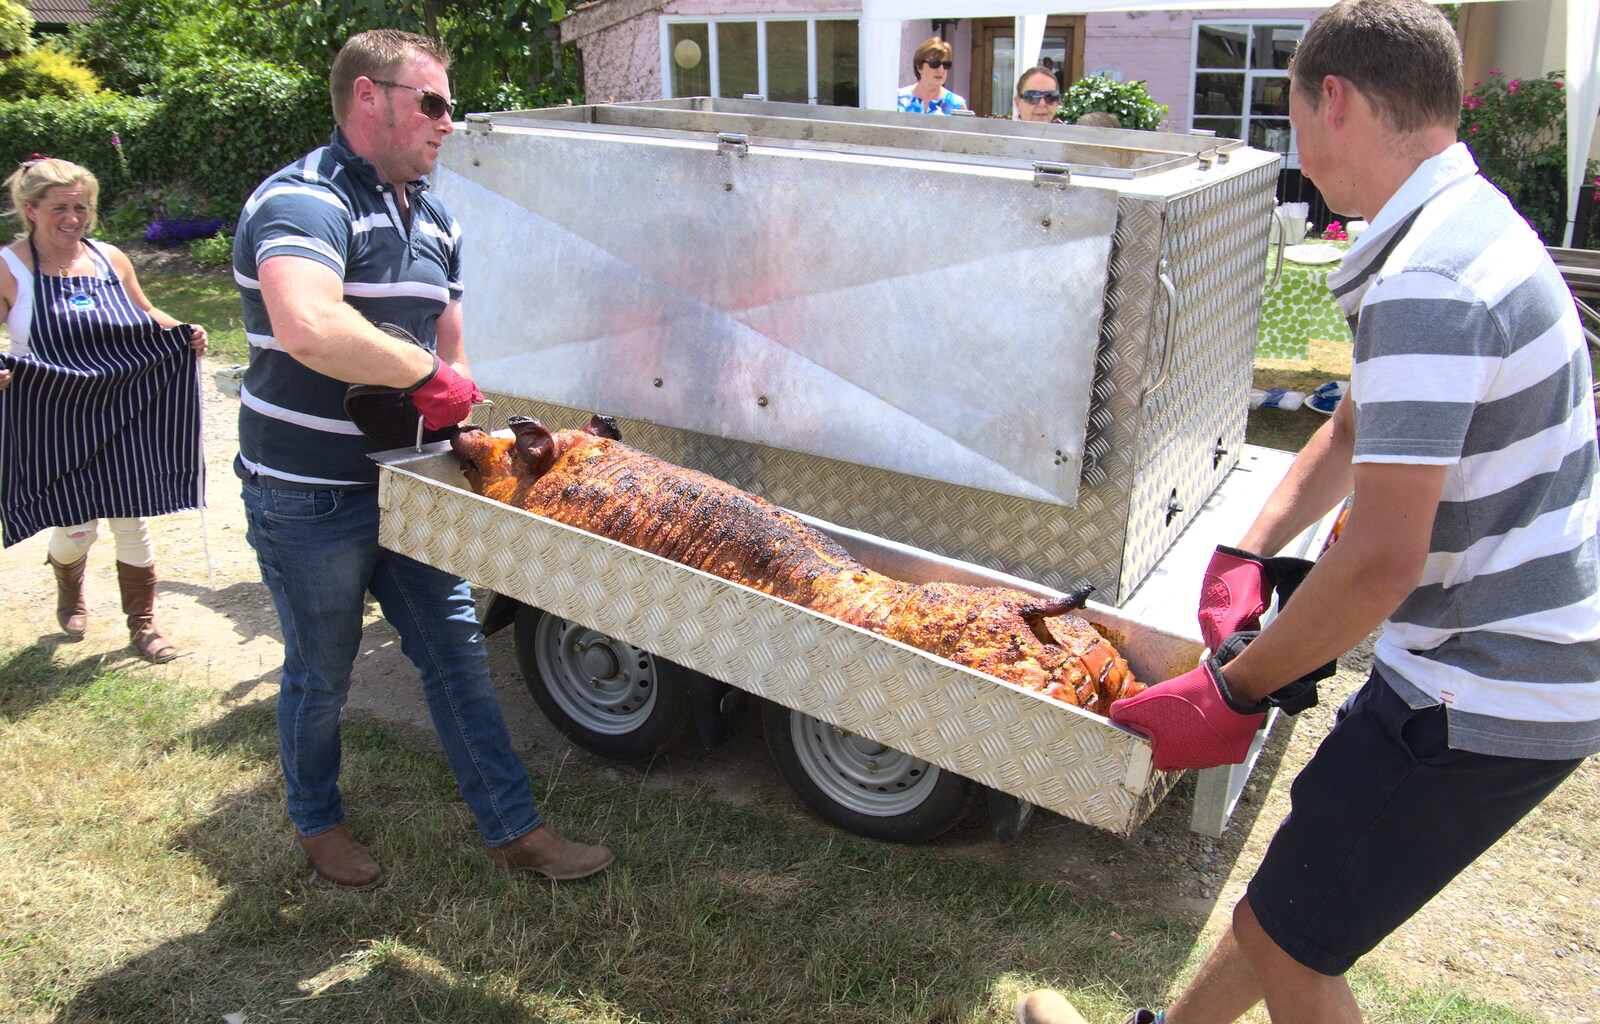 The crispy hog is hauled out from A Village Hog Roast, Little Green, Thrandeston, Suffolk - 24th June 2018